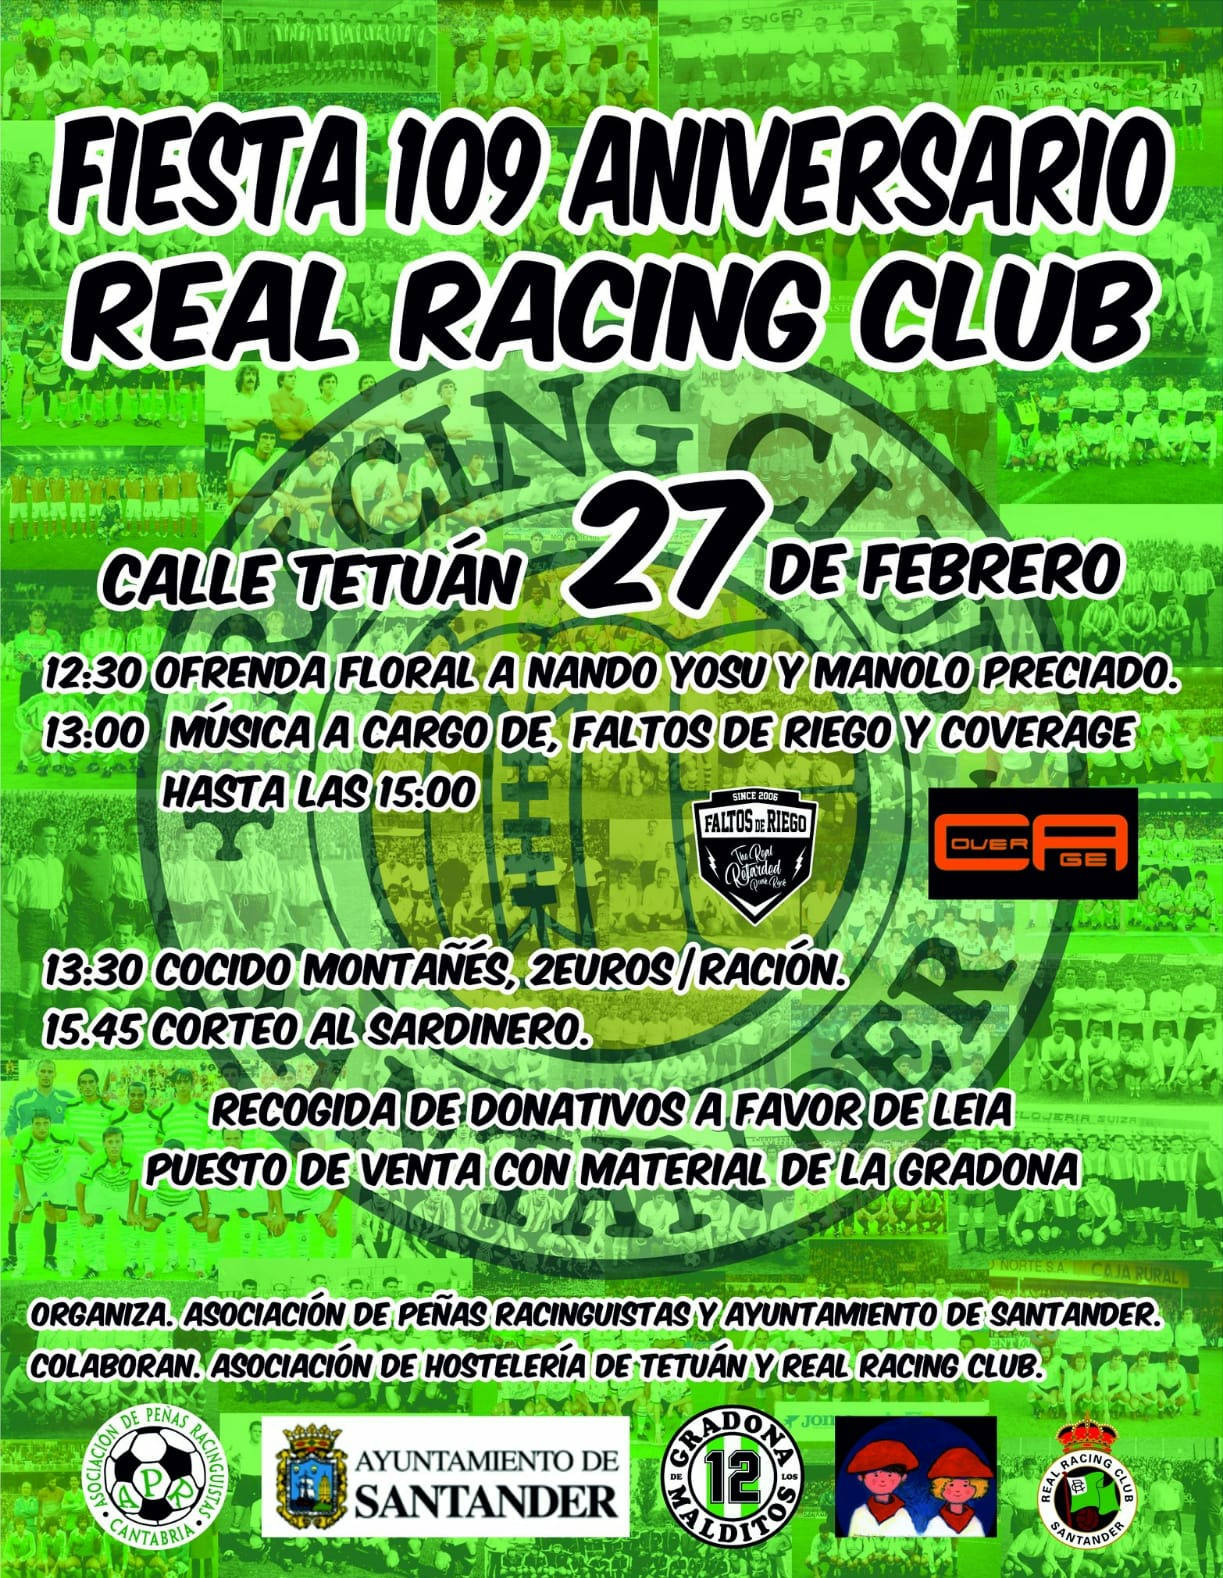 Fiesta 109 Aniversario Real Racing Club